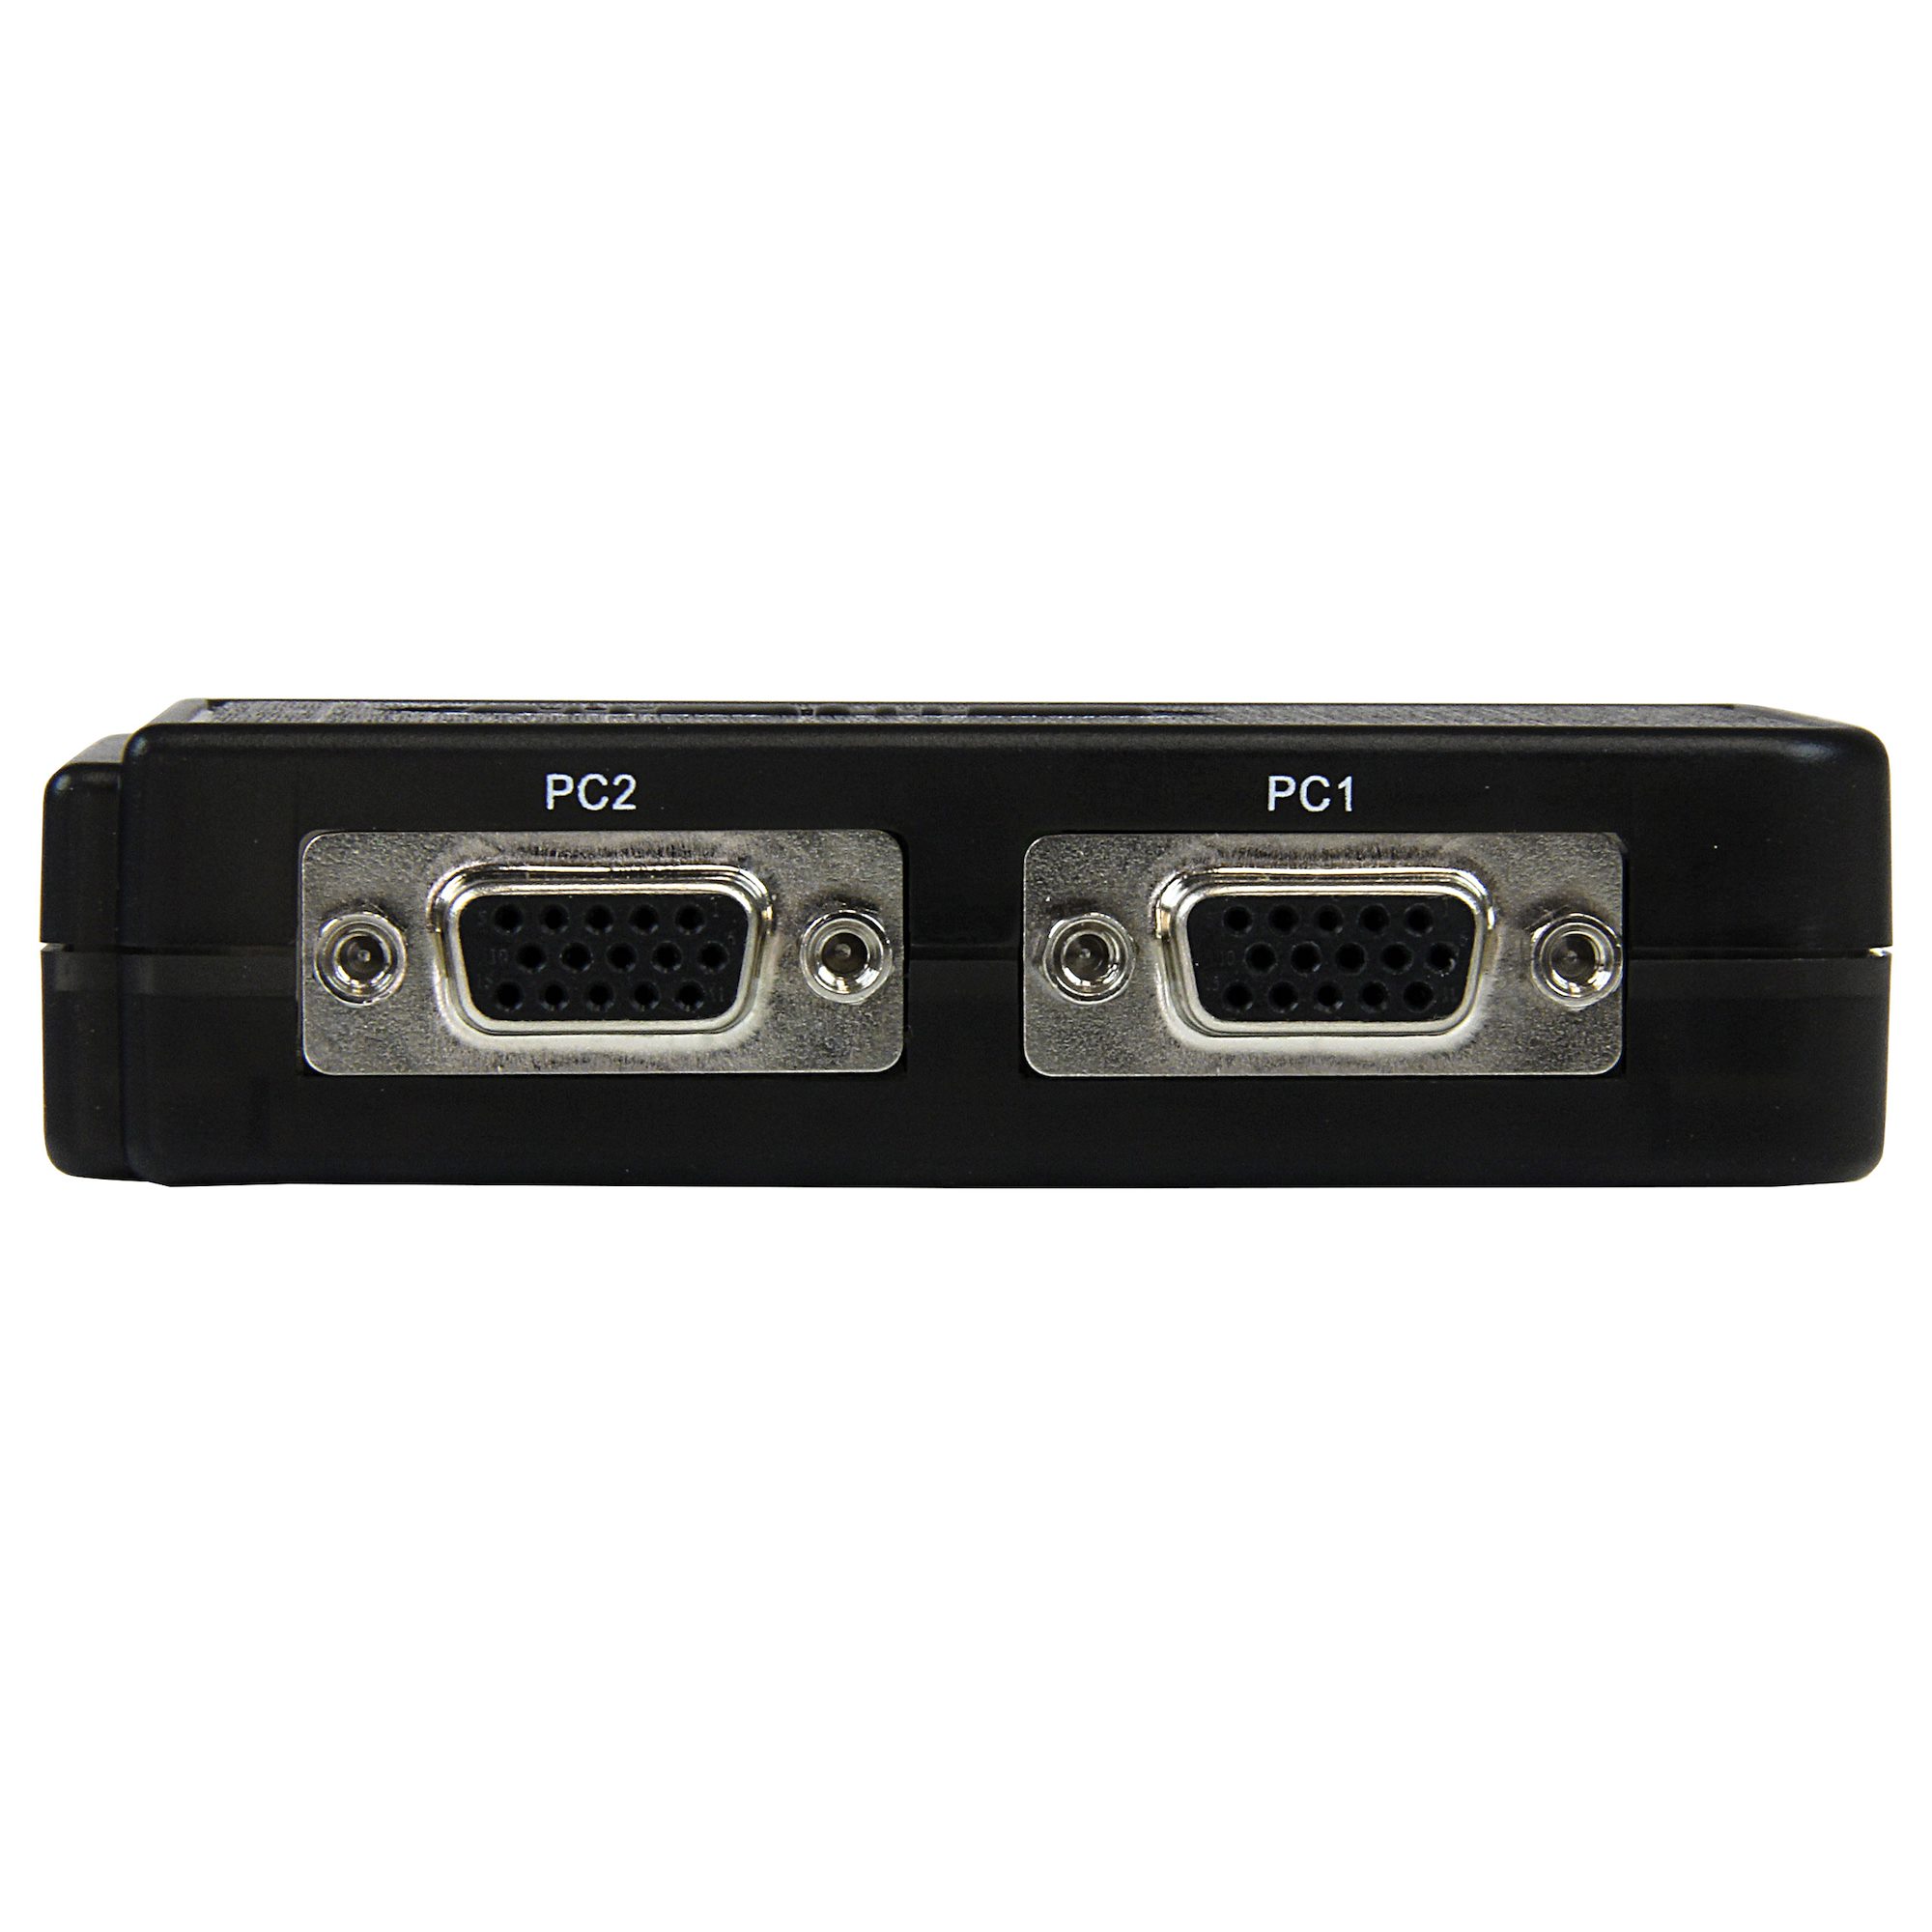 2 Port USB KVM Switch w/ Audio & Cables - Conmutadores KVM